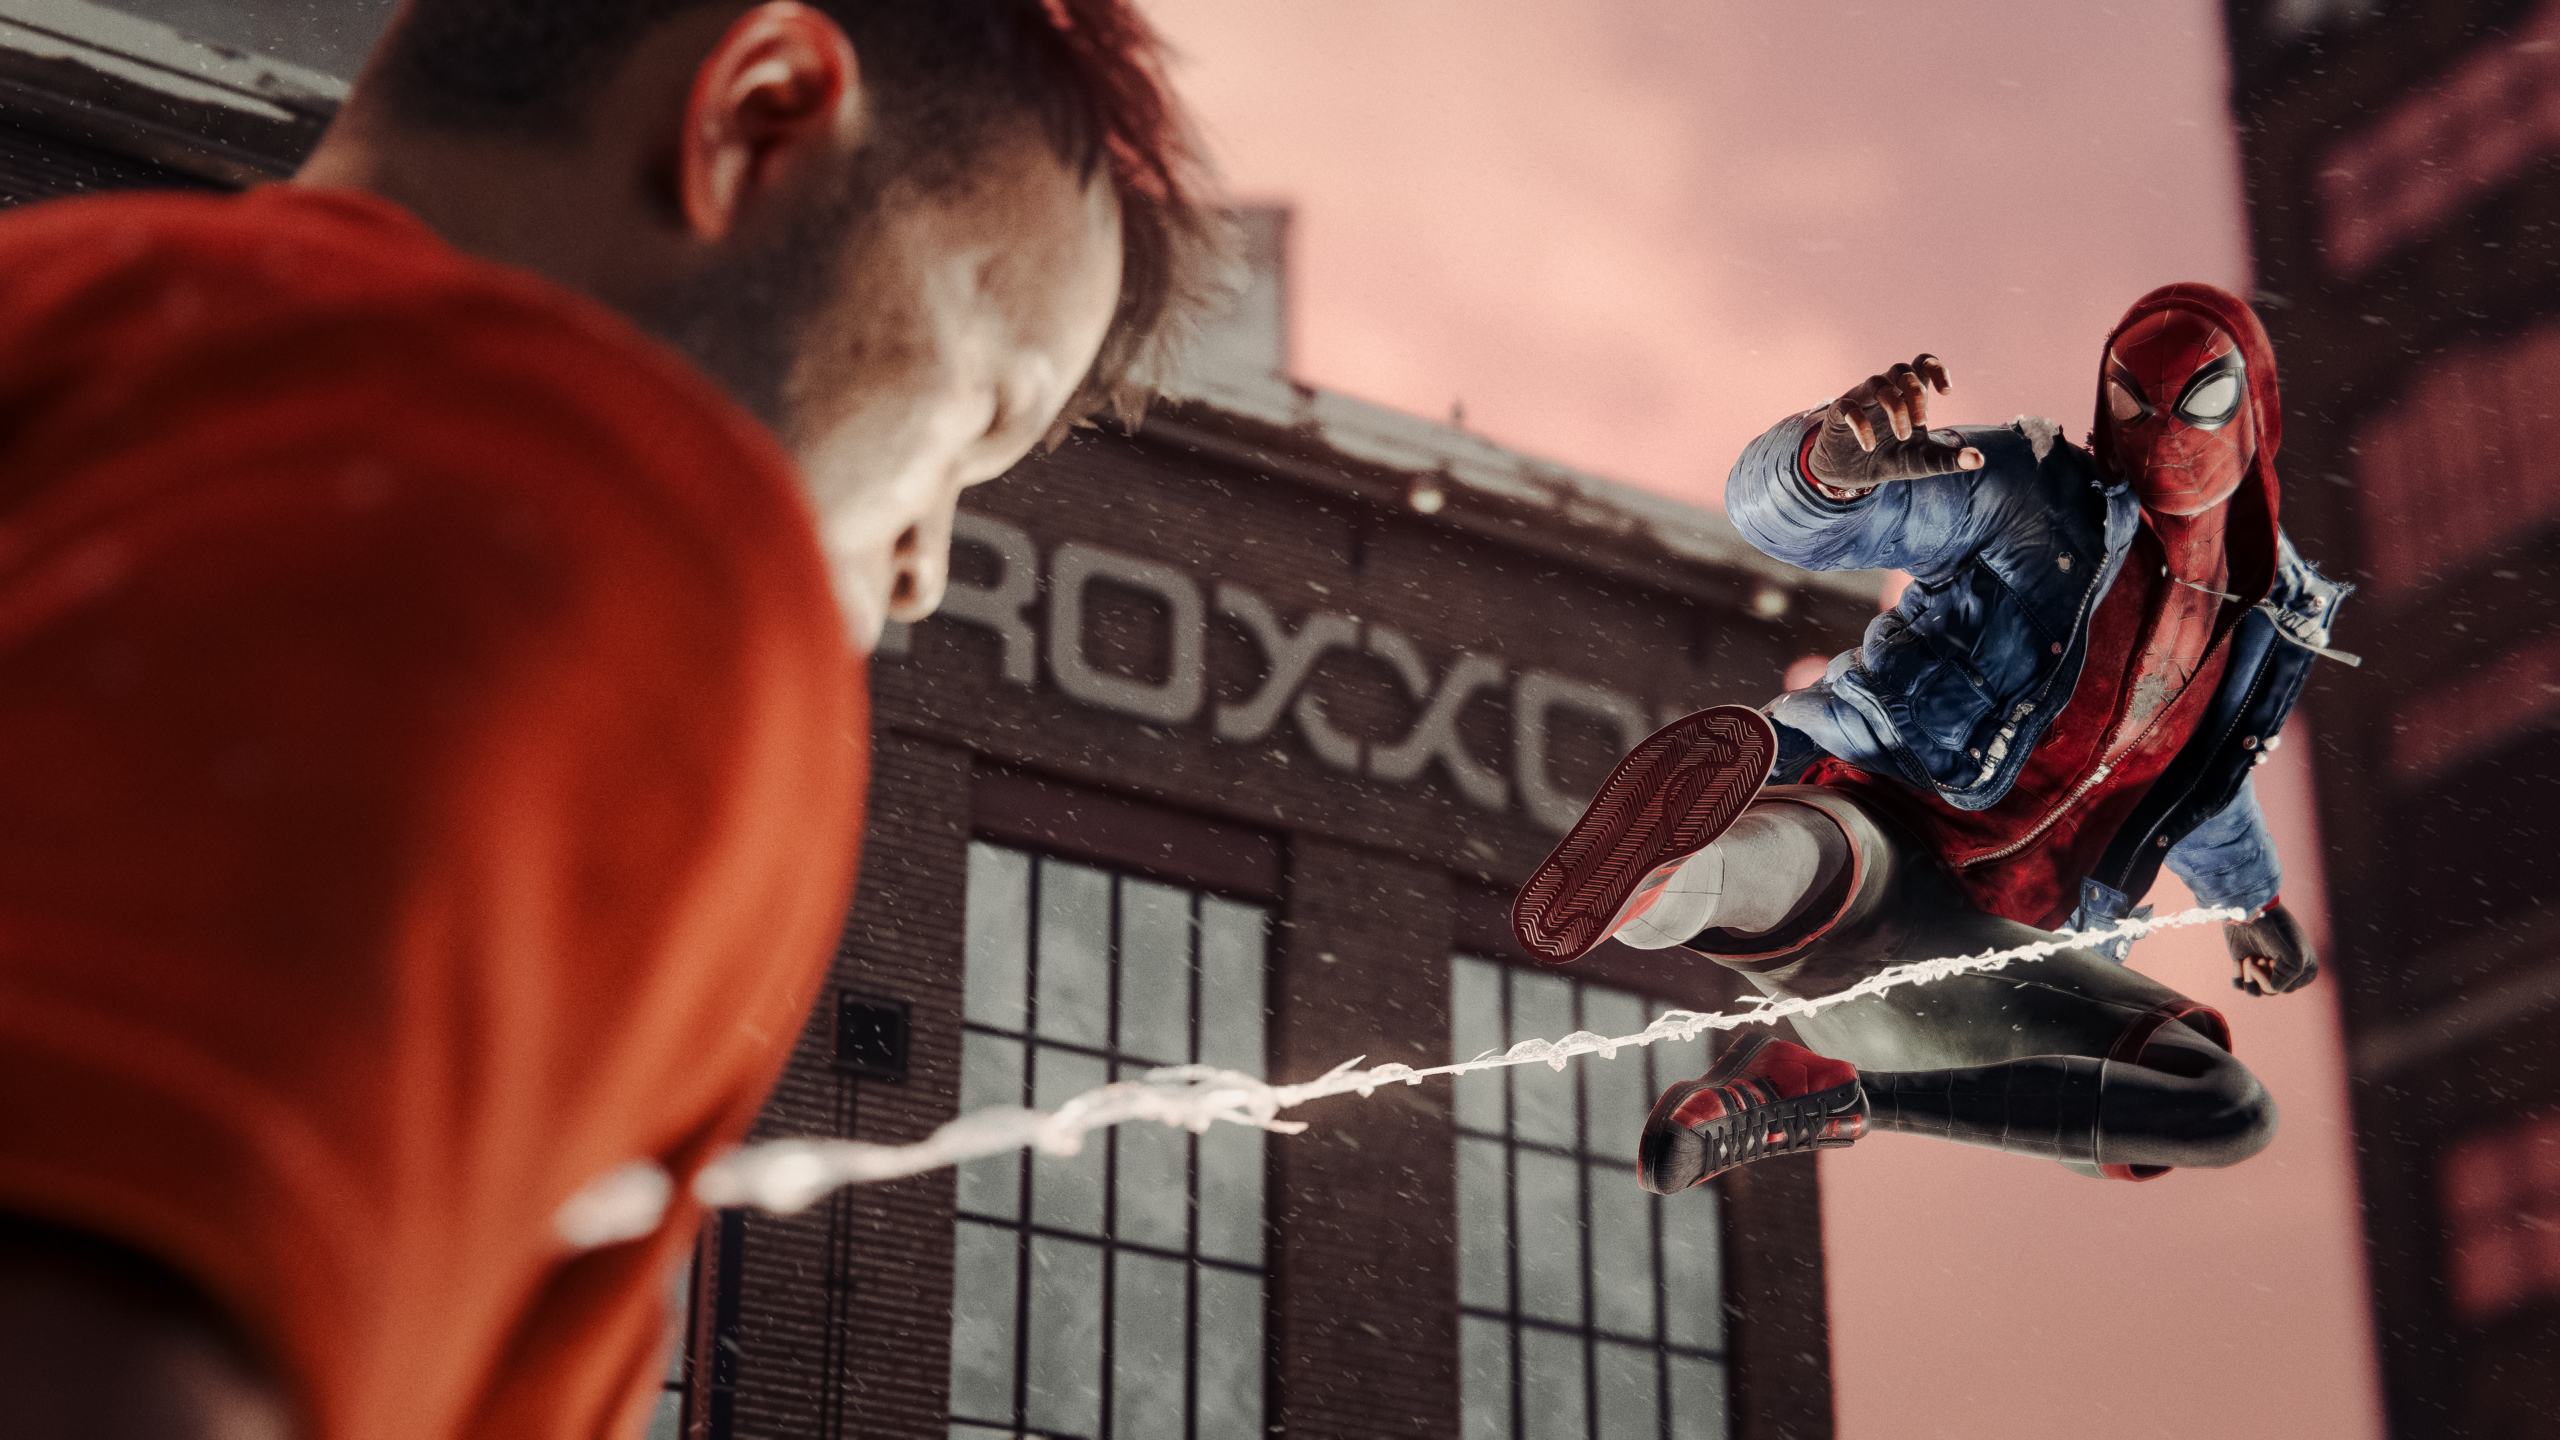 Marvel's Spider-Man: Miles Morales, PC